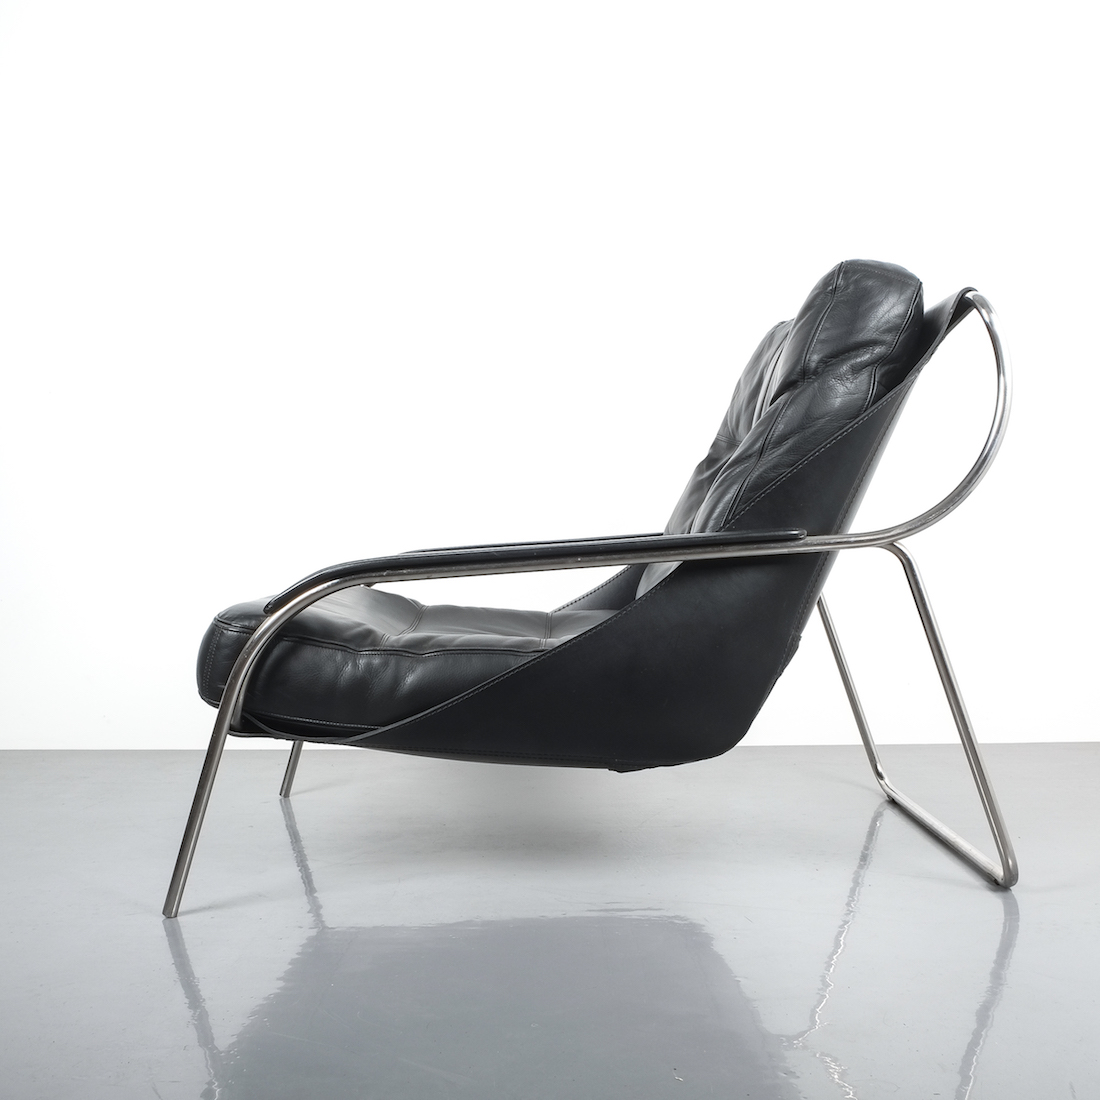 Marco Zanuso Maggiolina Sling Black Leather Chair By Zanotta 1947